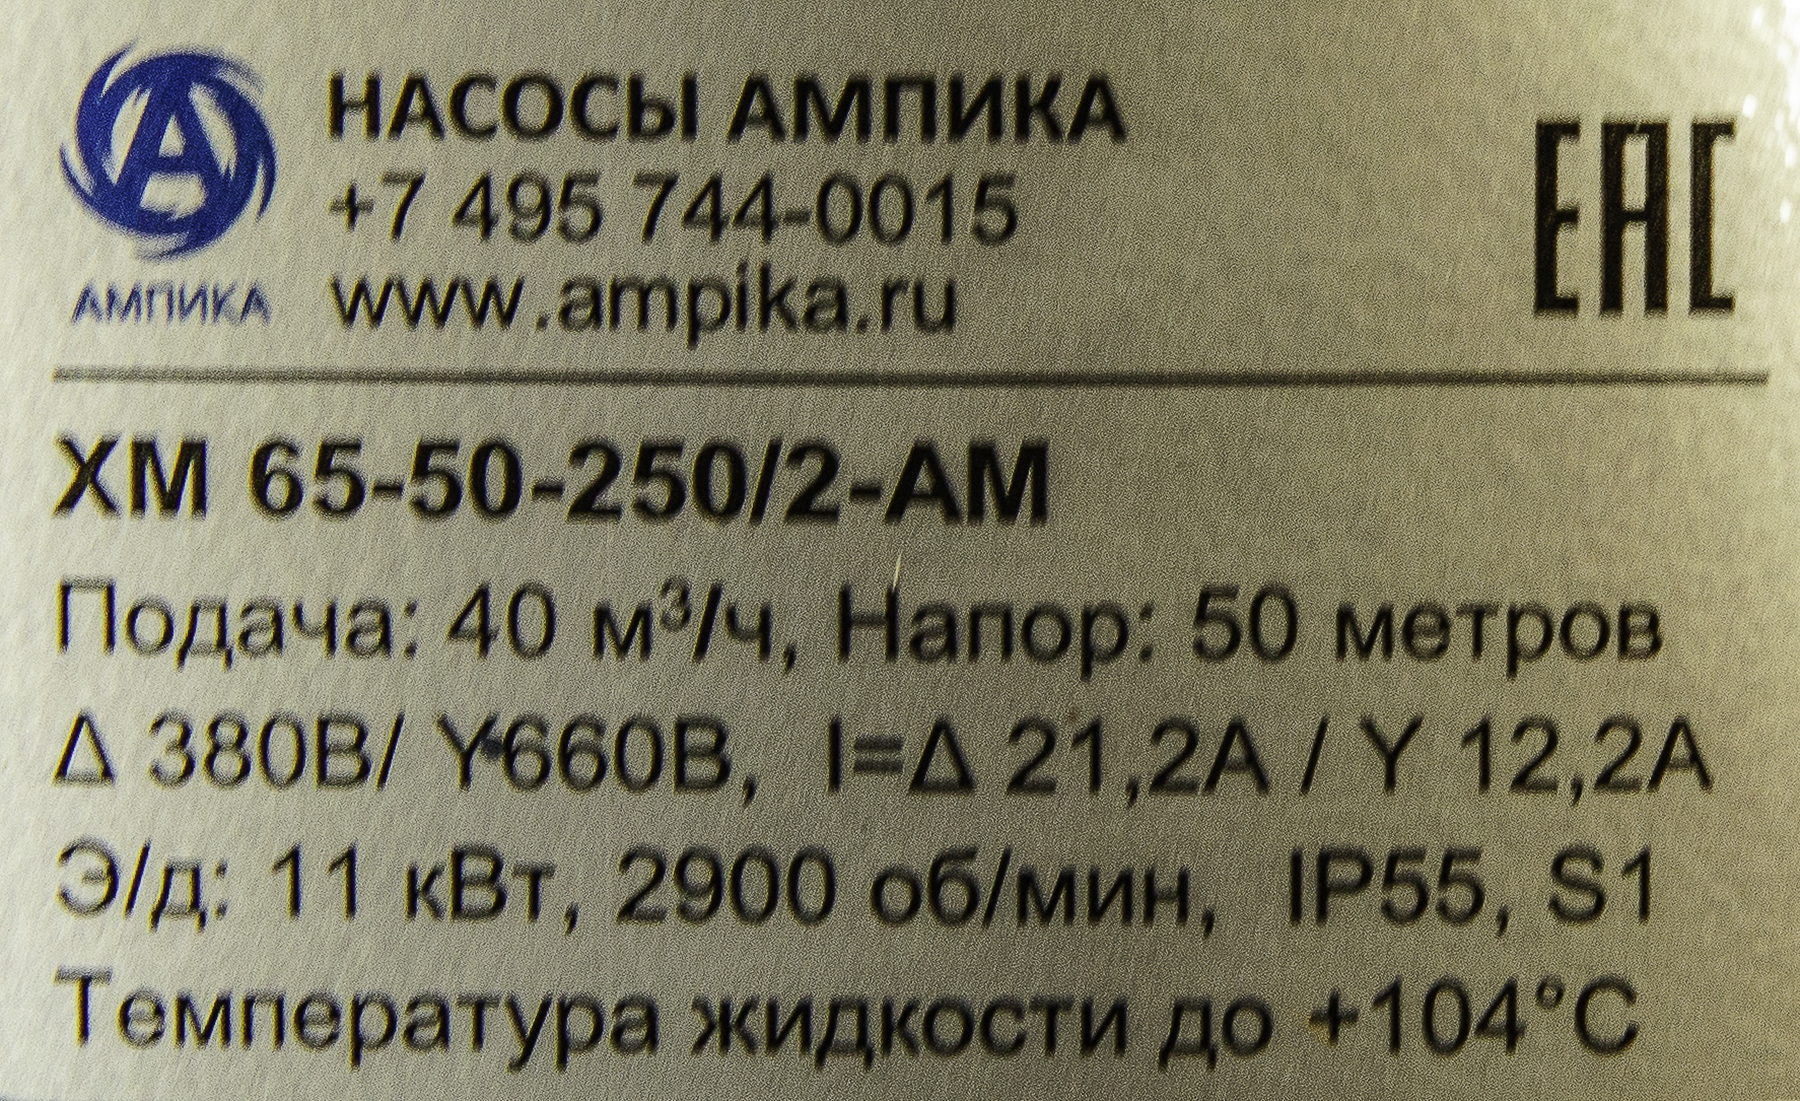 ХМ 65-50-250/2-АМ